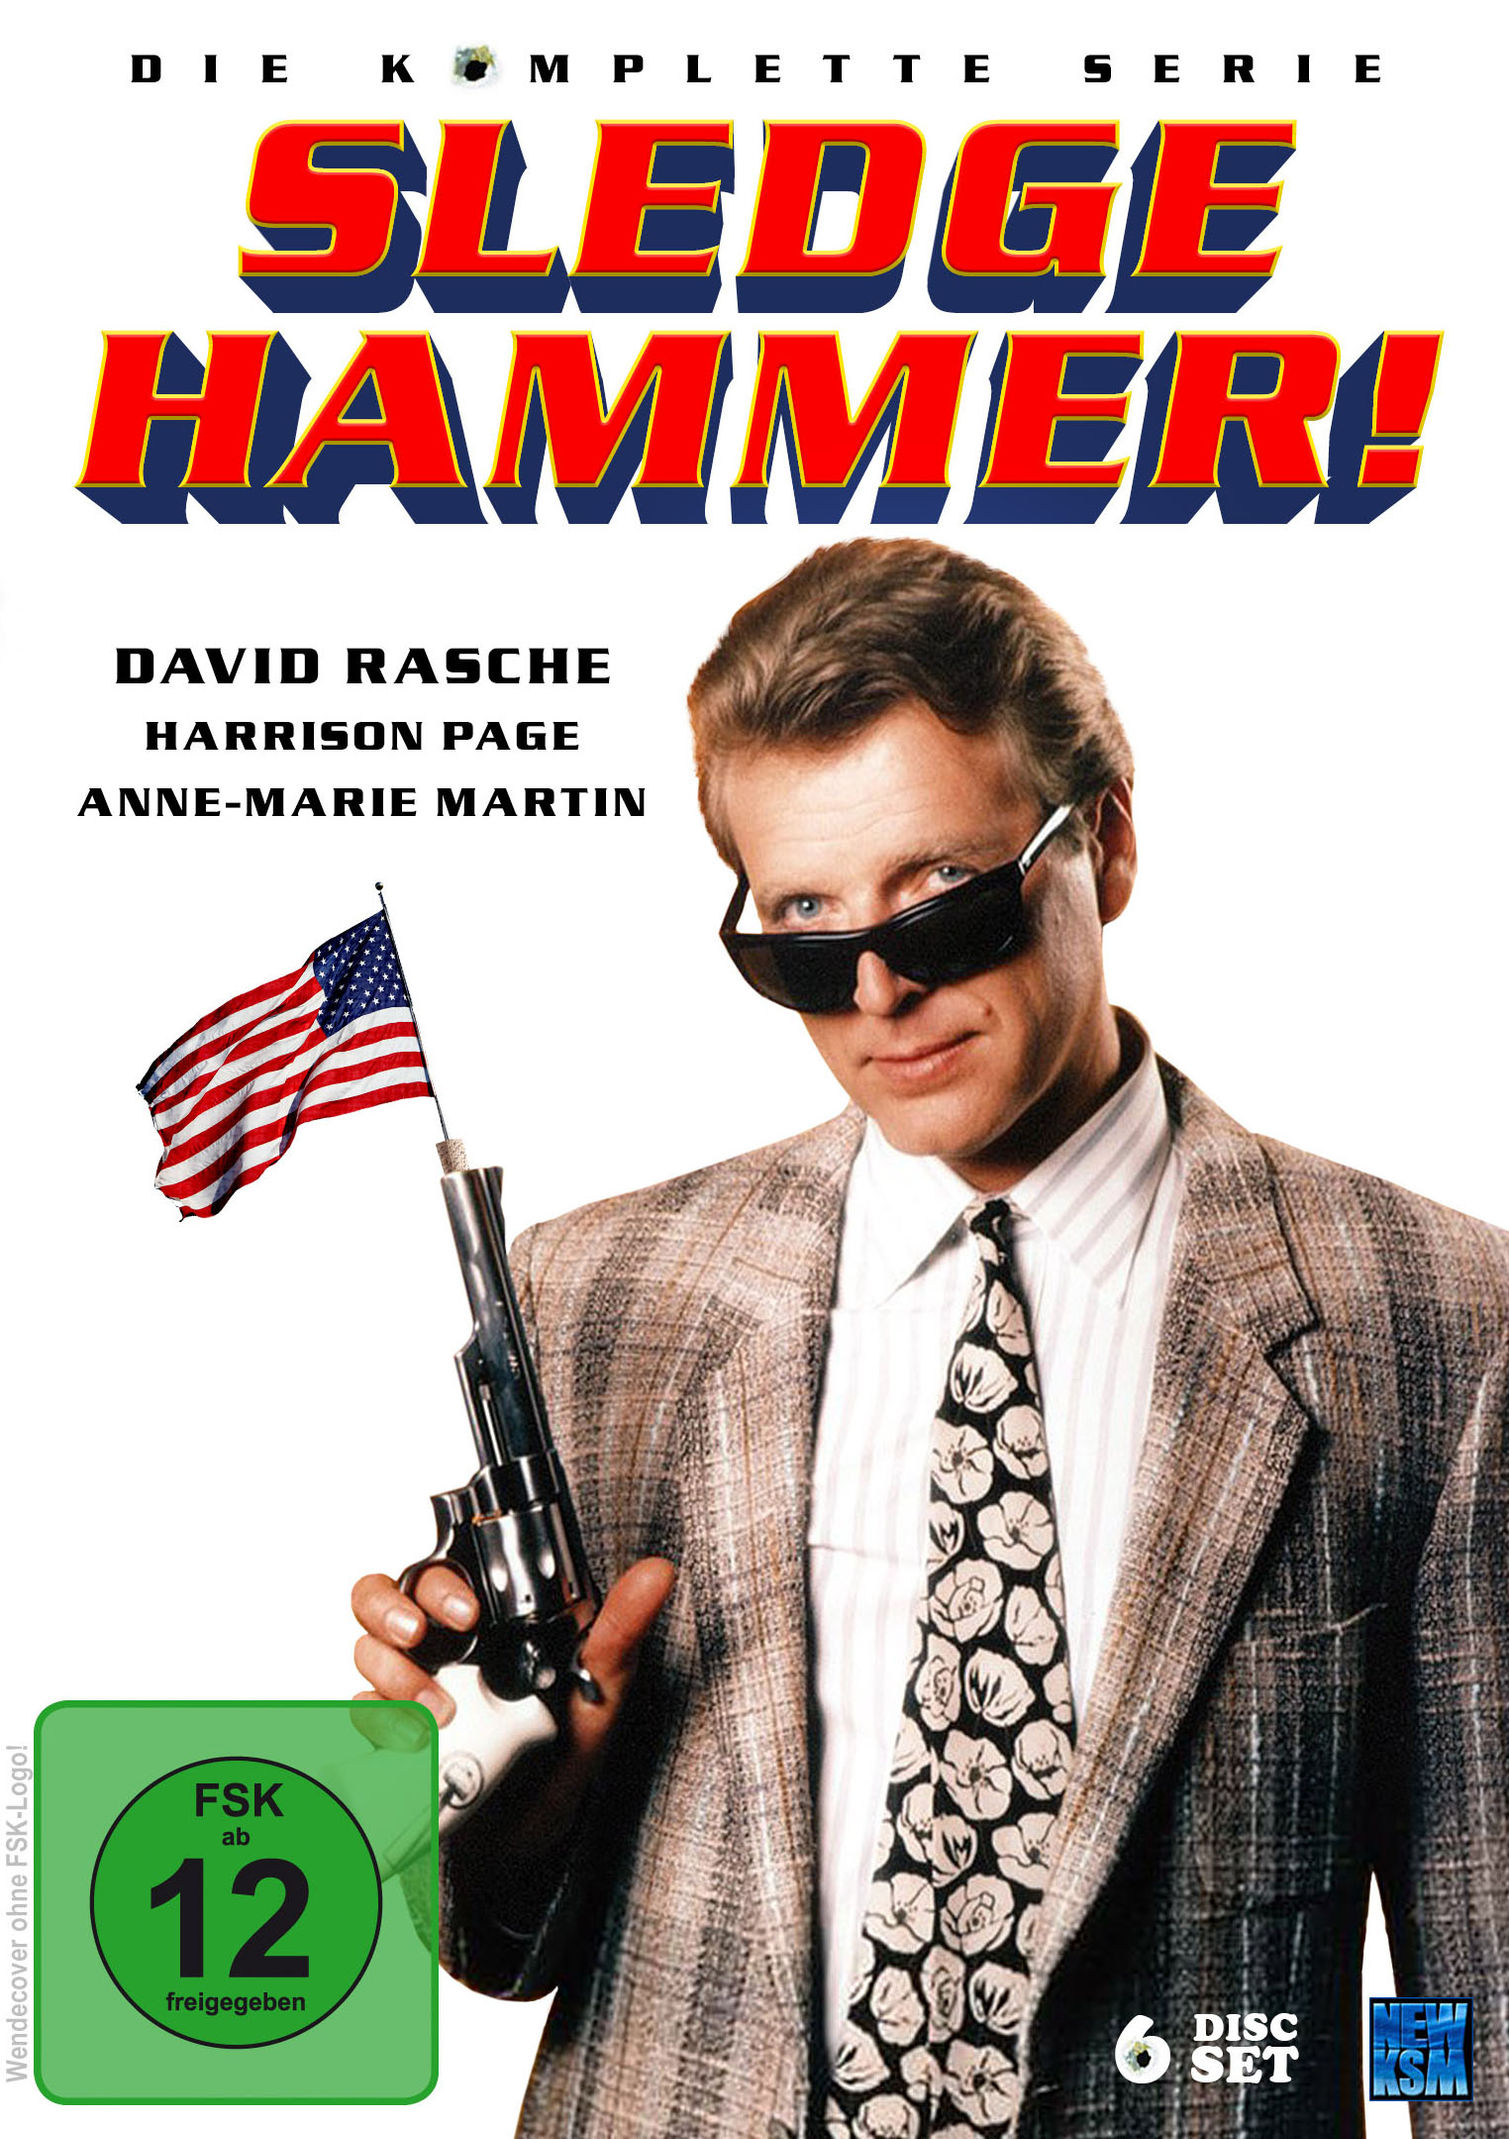 Sledge Hammer - Die komplette Serie DVD bei Weltbild.de bestellen